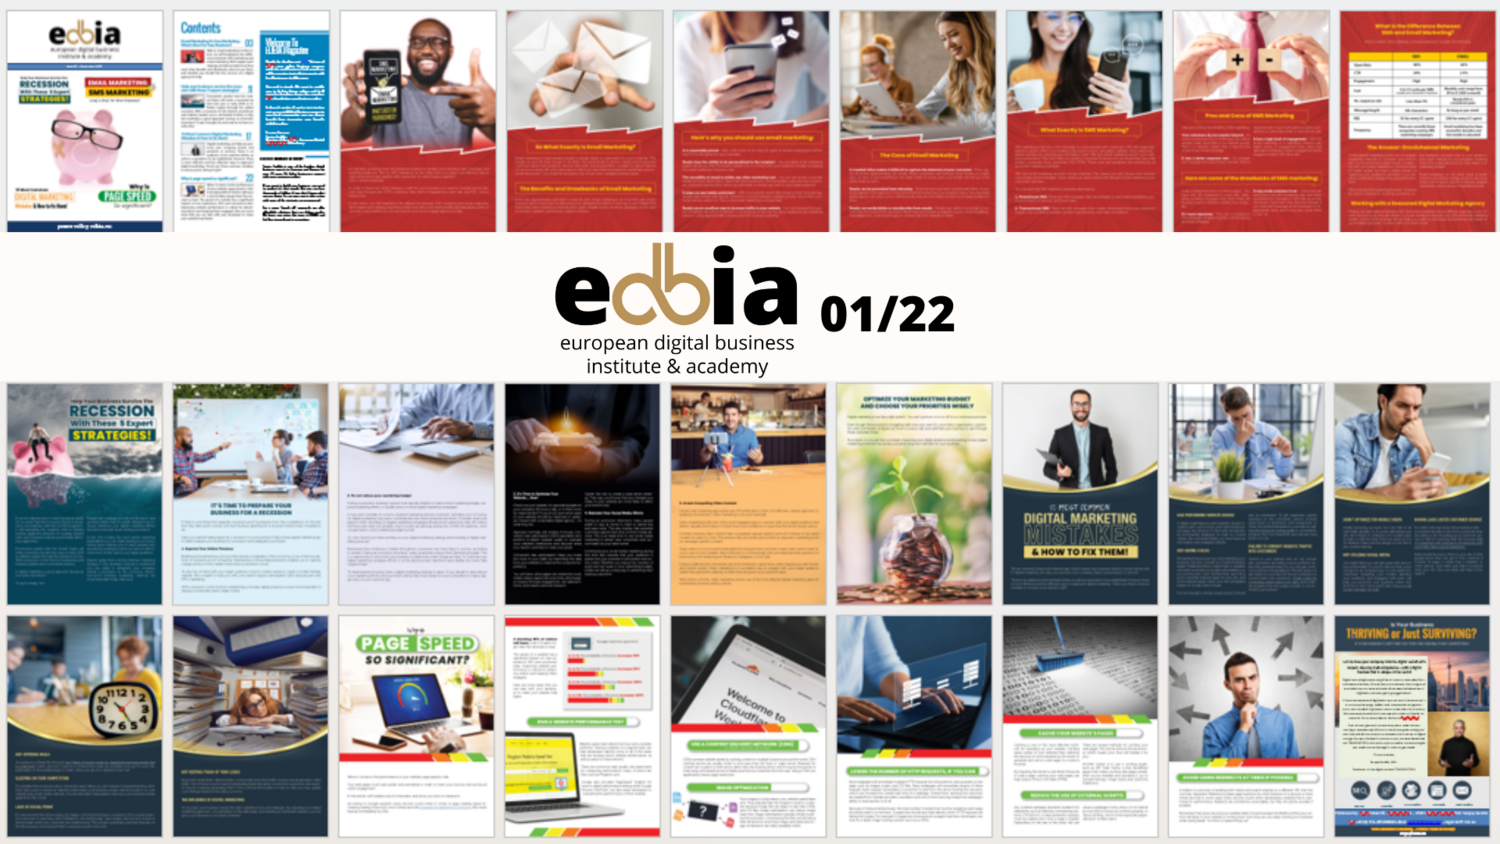 01/22: Online Magazine edbia - European Digital Business Institute & Academy